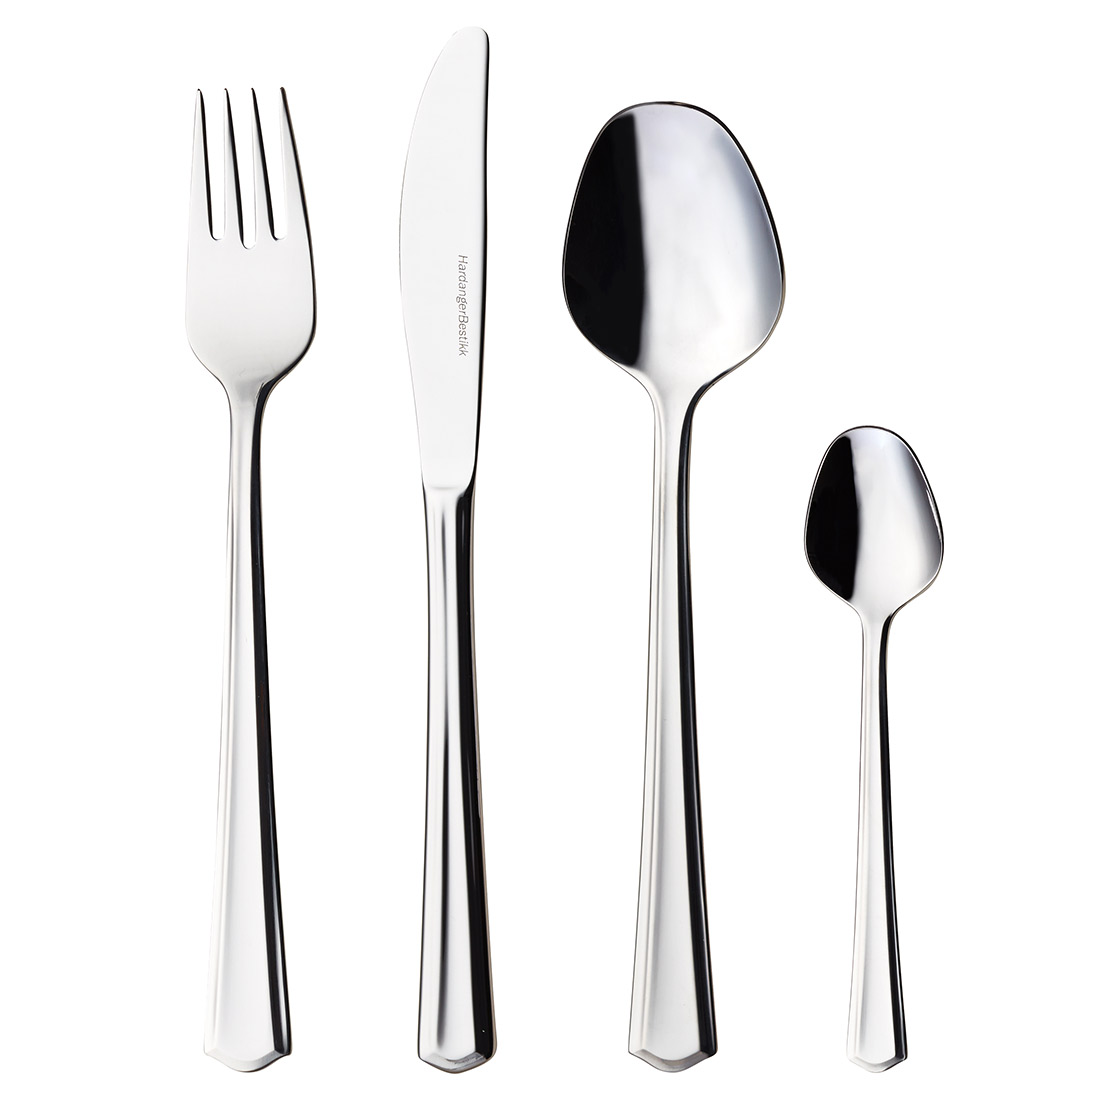 Mira cutlery set product image